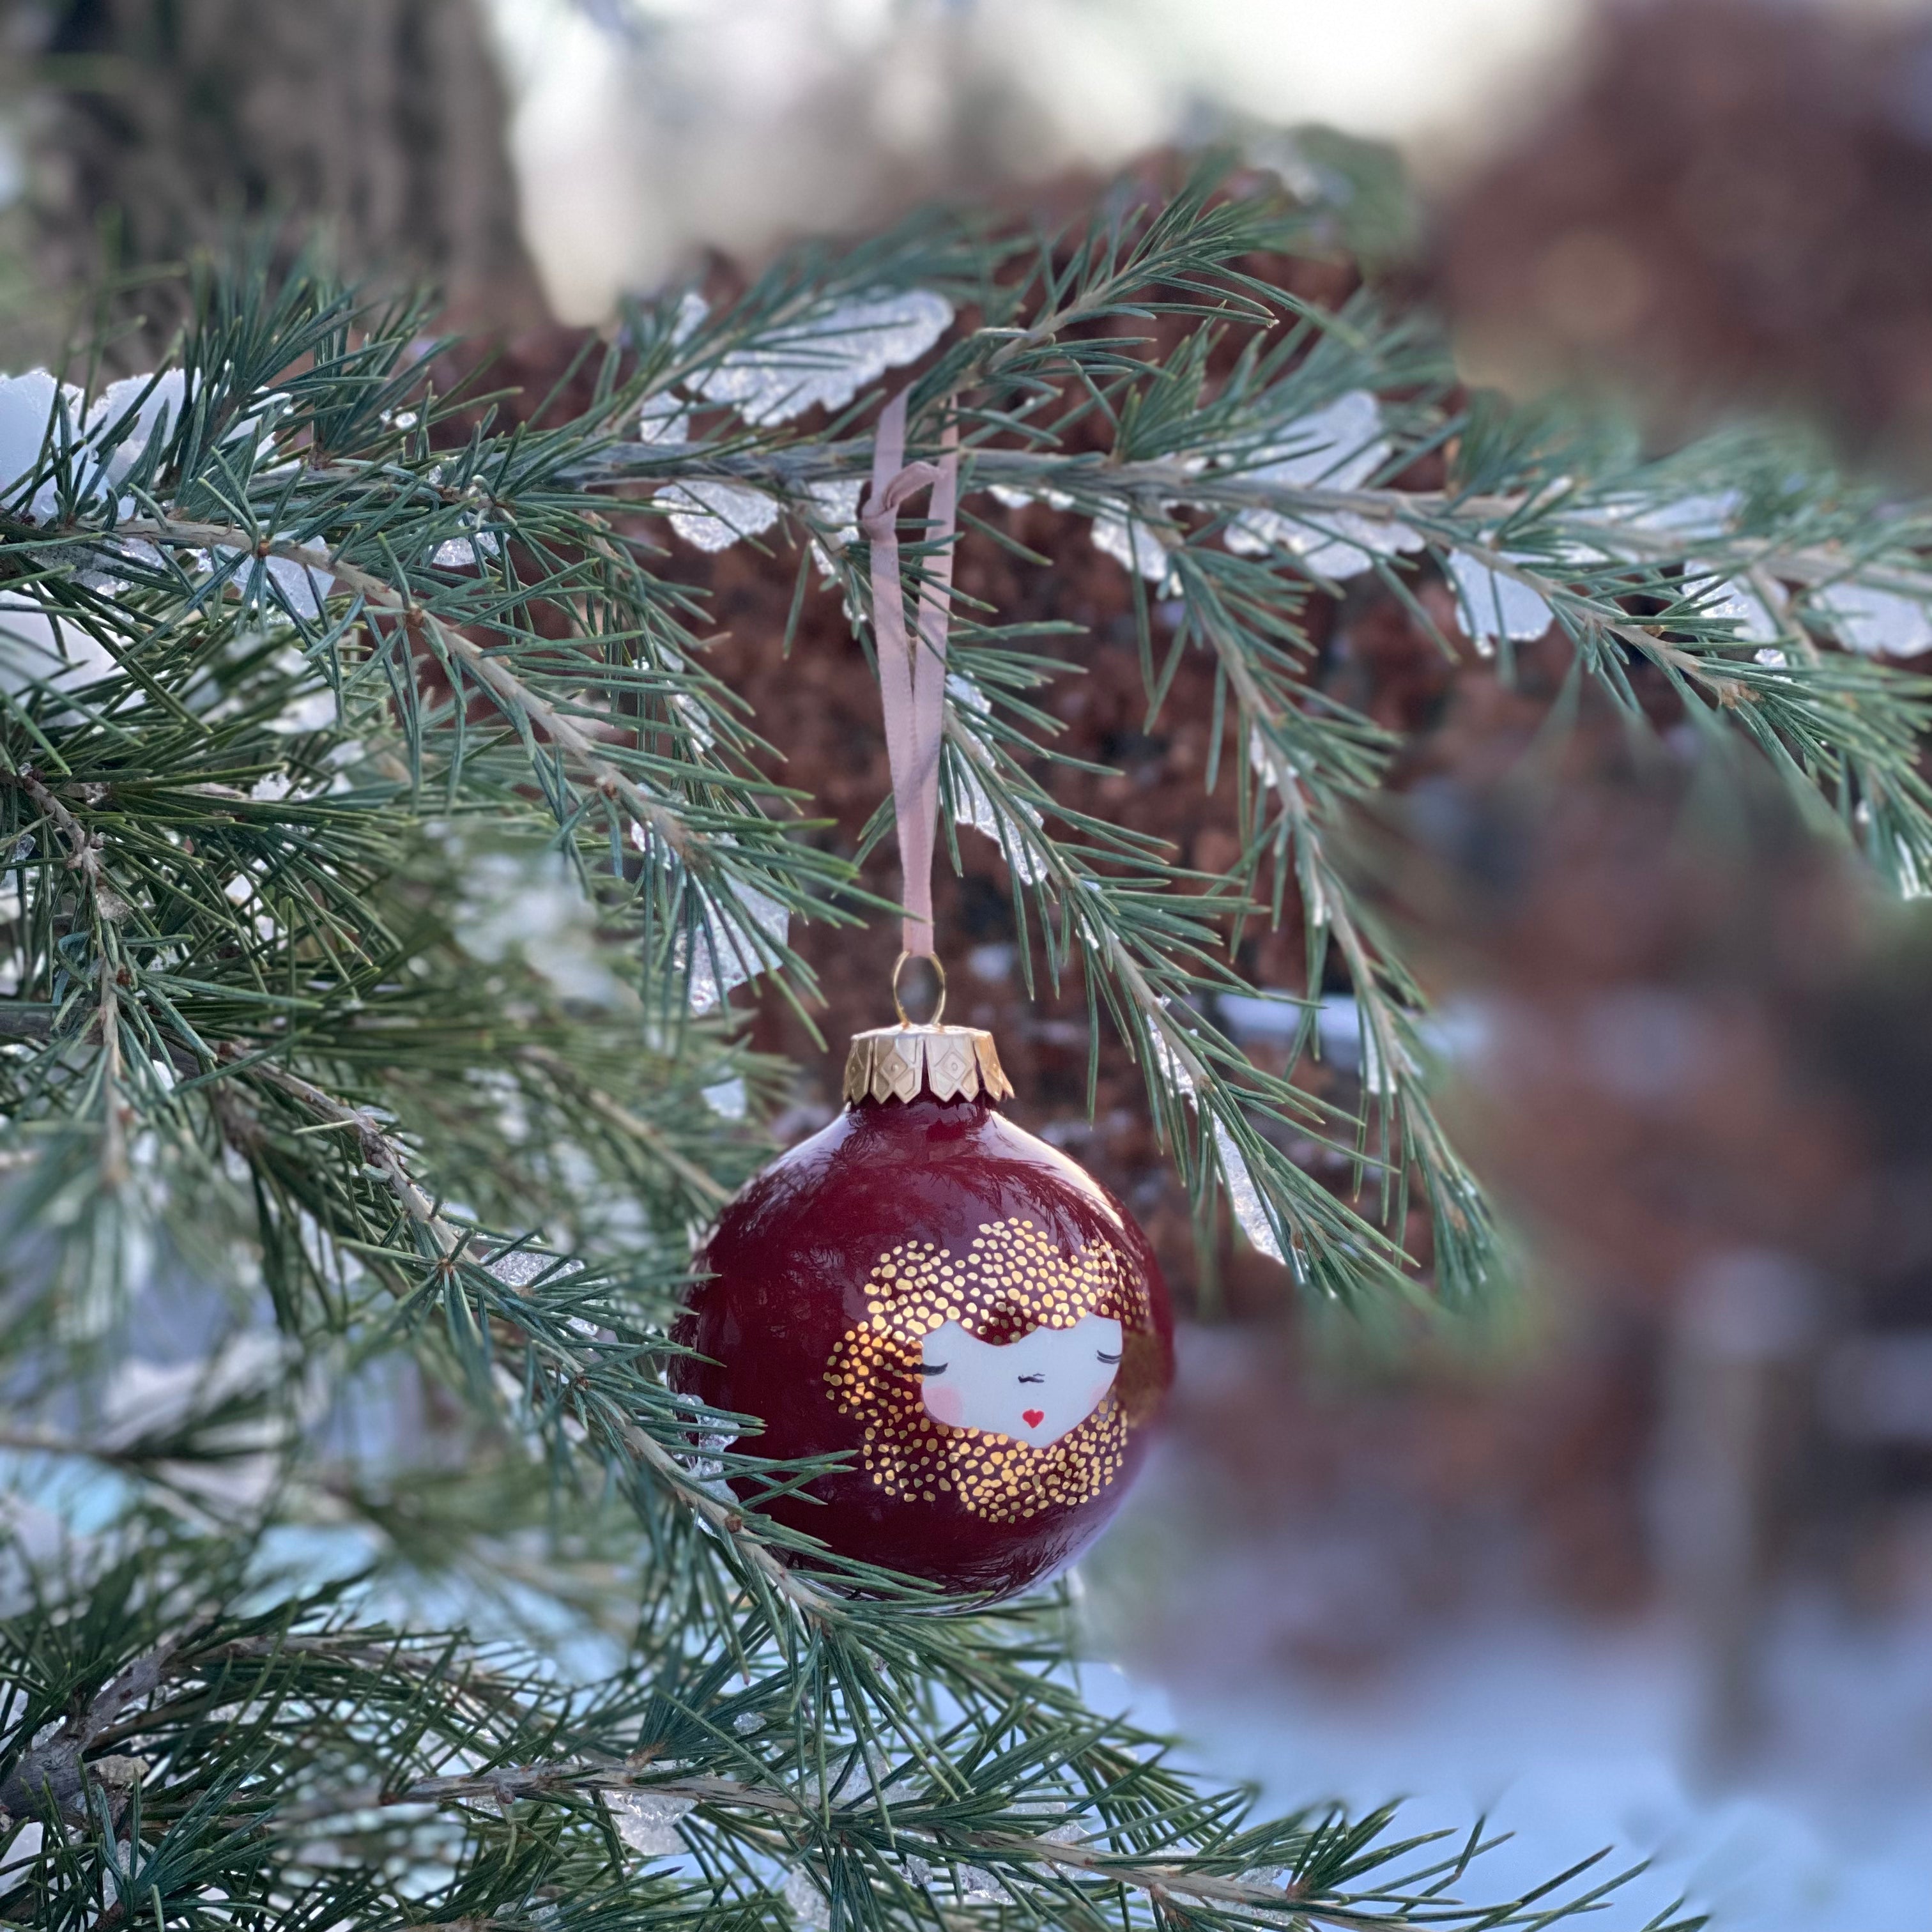 Marinski Heartmade Christmas ball dotty lace - burgundy